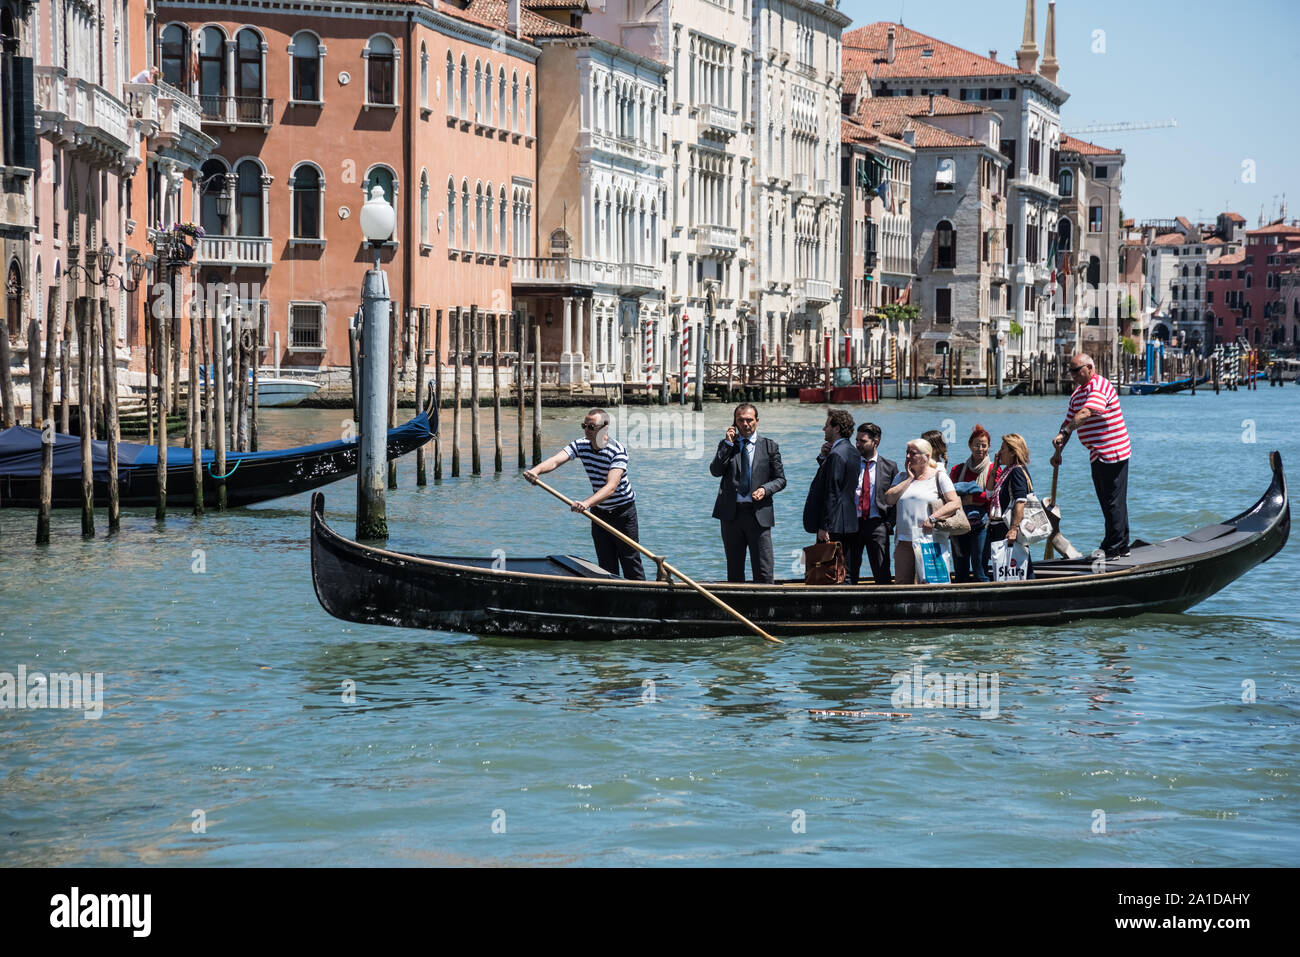 Venedig, Traghetto (Fähre über den Canale Grande) - Venice, Traghetto Gondola on Canale Grande Stock Photo